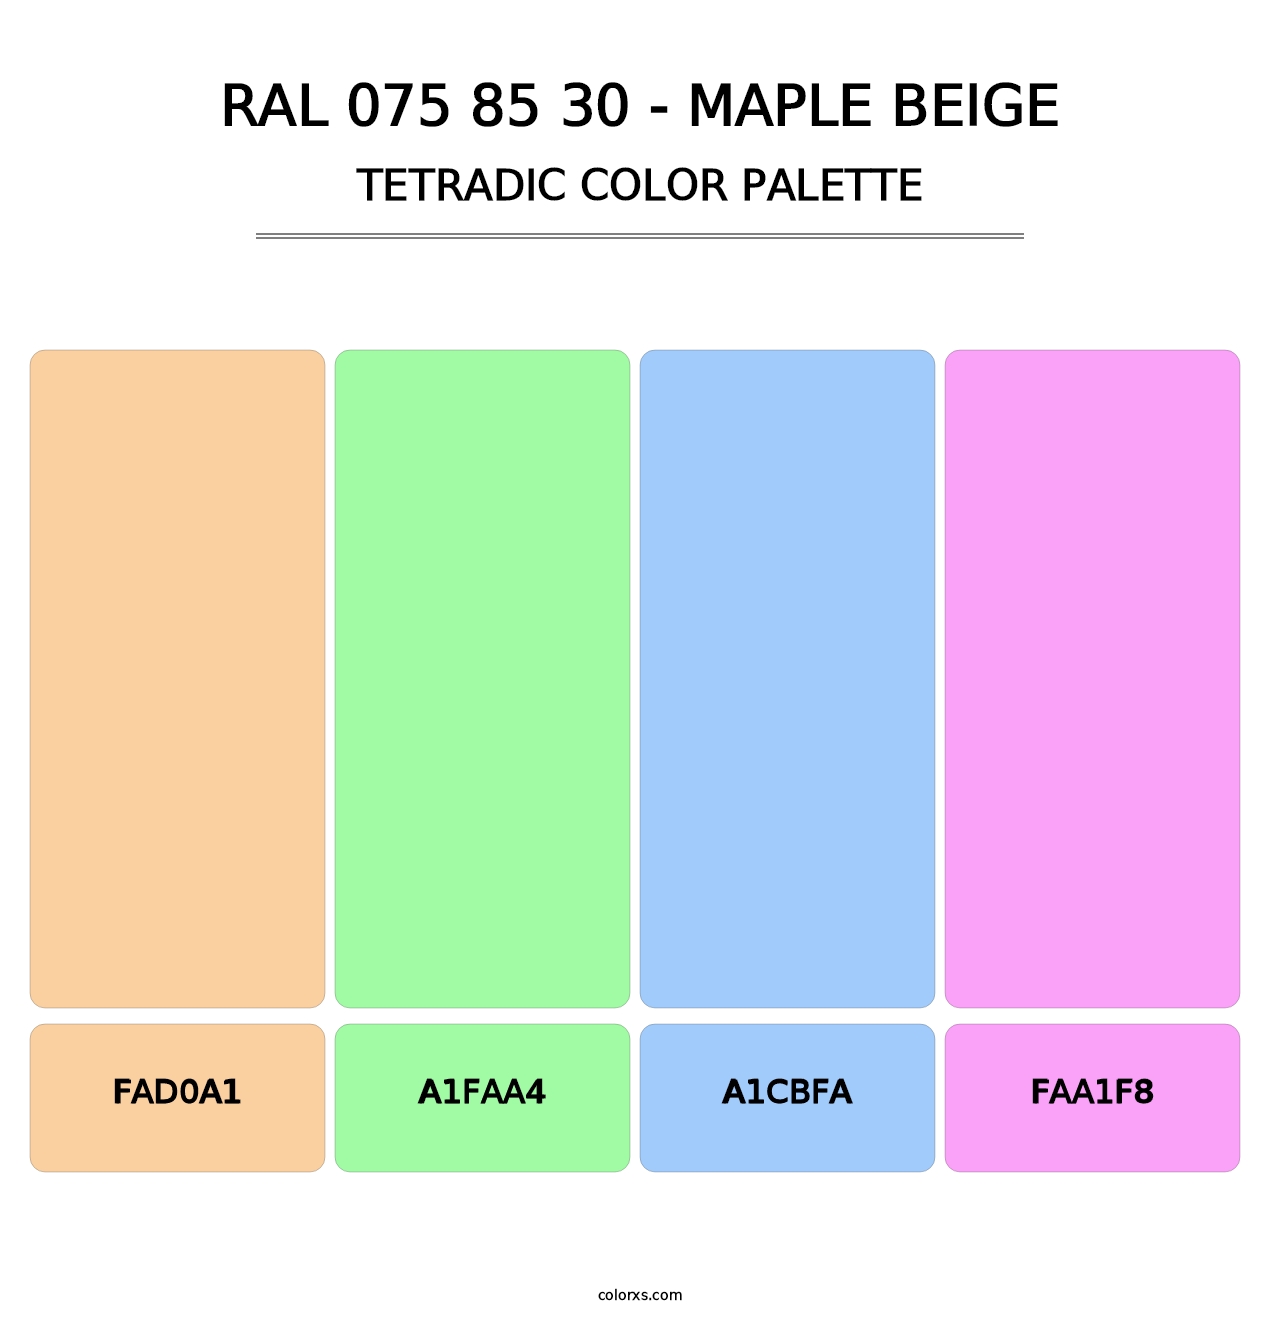 RAL 075 85 30 - Maple Beige - Tetradic Color Palette